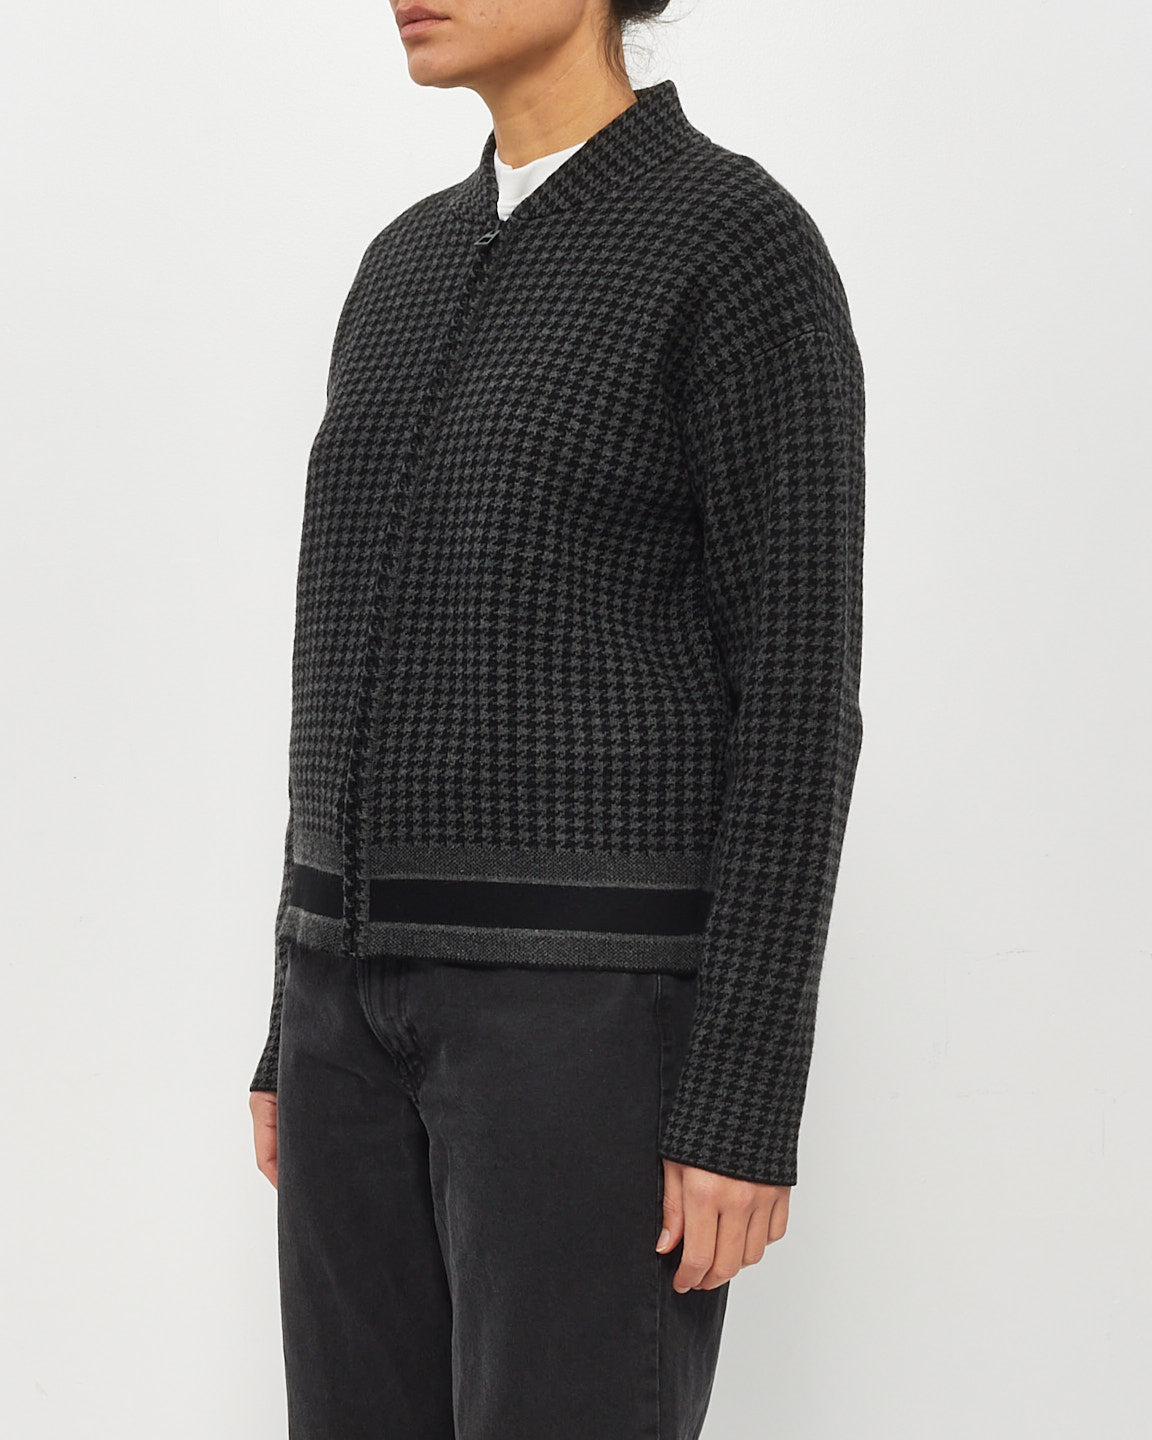 Dior Black/Grey Houndstooth Cashmere Zip Up Sweater - 6US